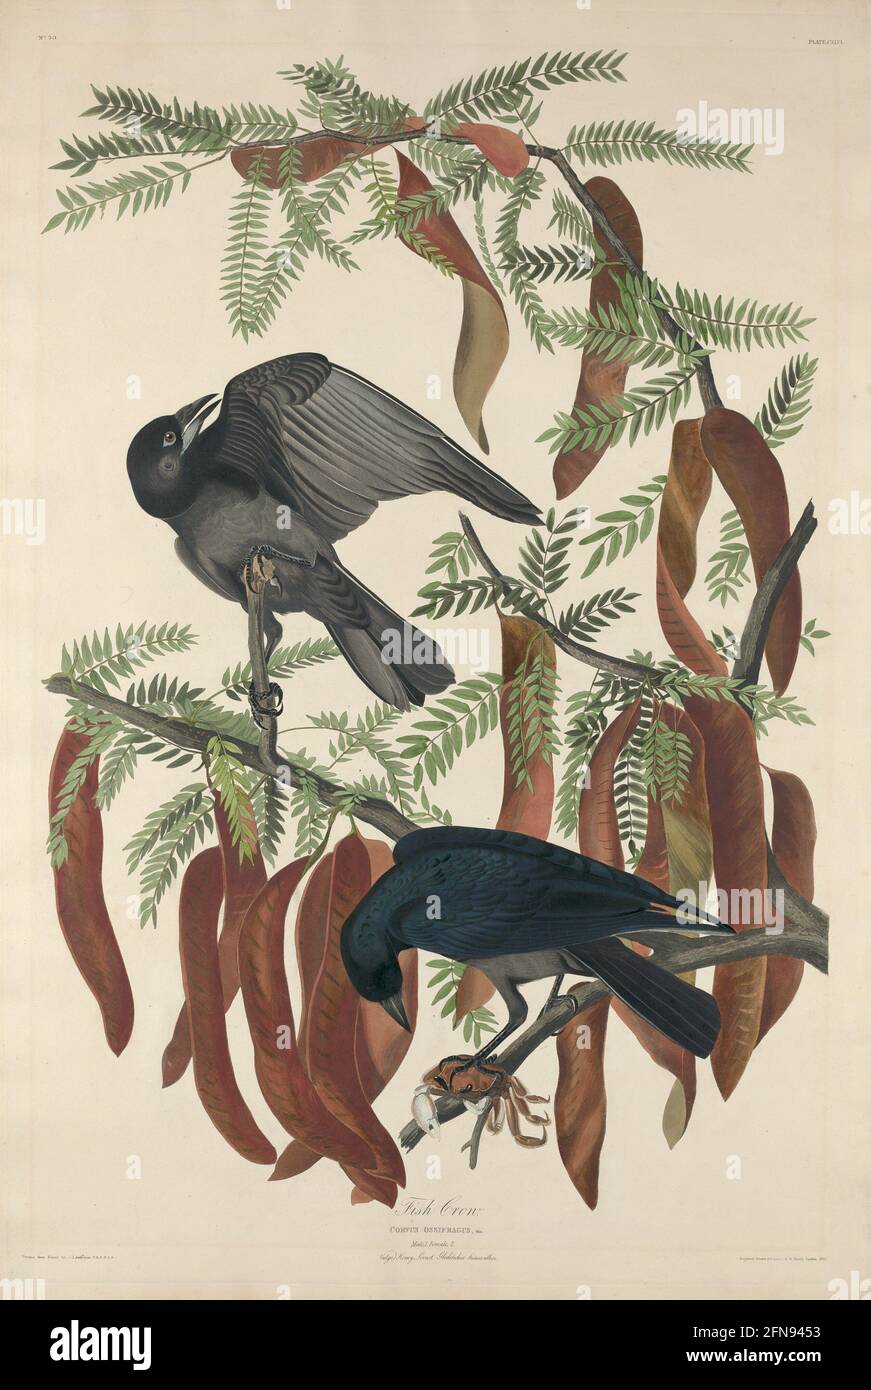 Fish Crow, 1832. Stock Photo